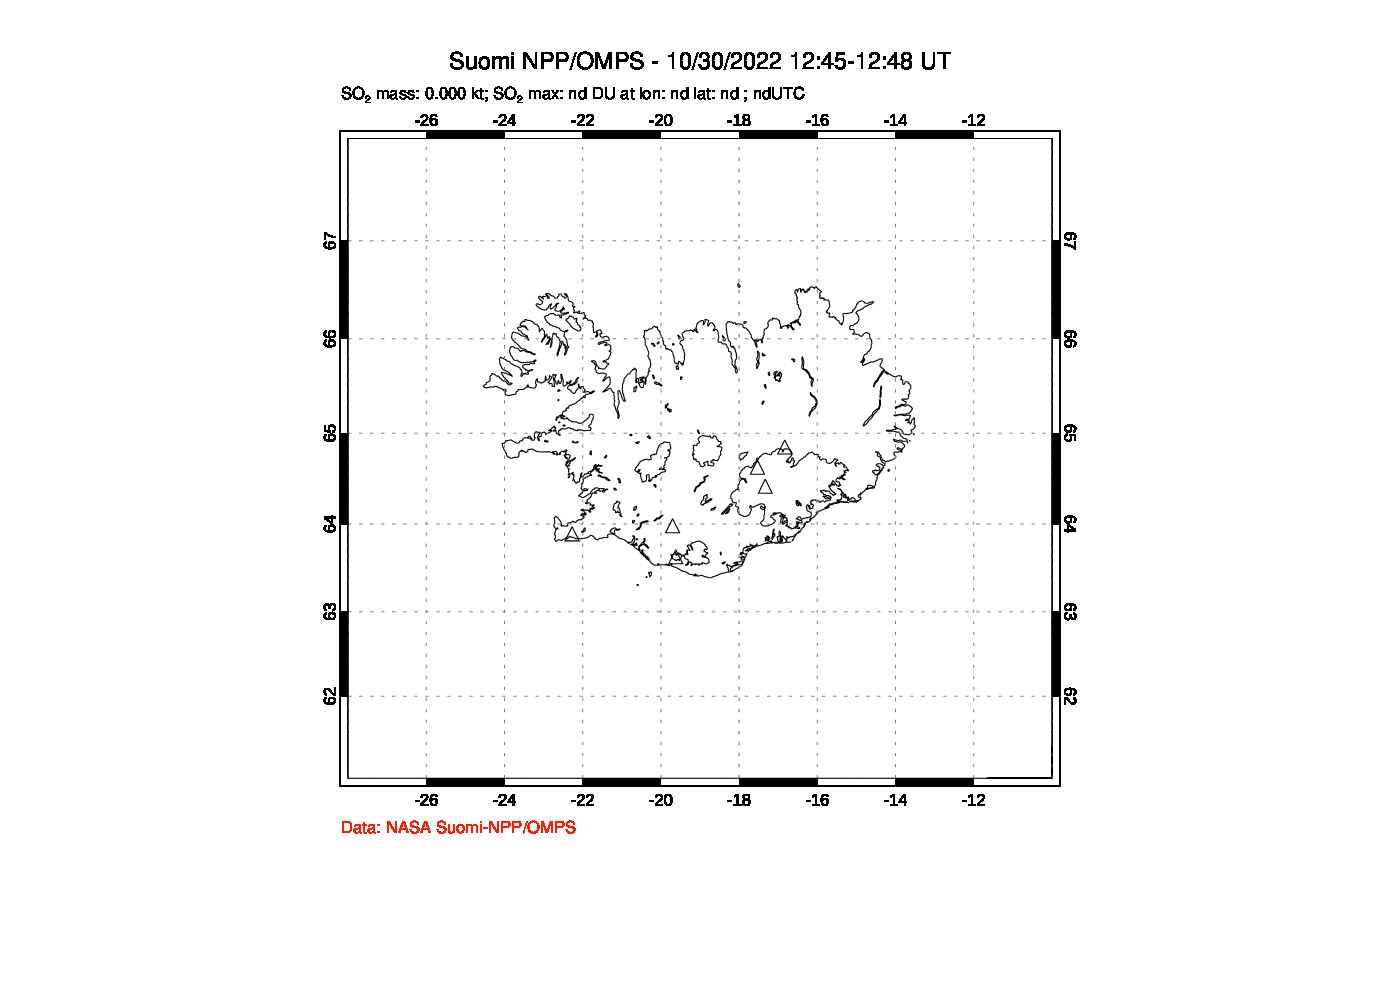 A sulfur dioxide image over Iceland on Oct 30, 2022.